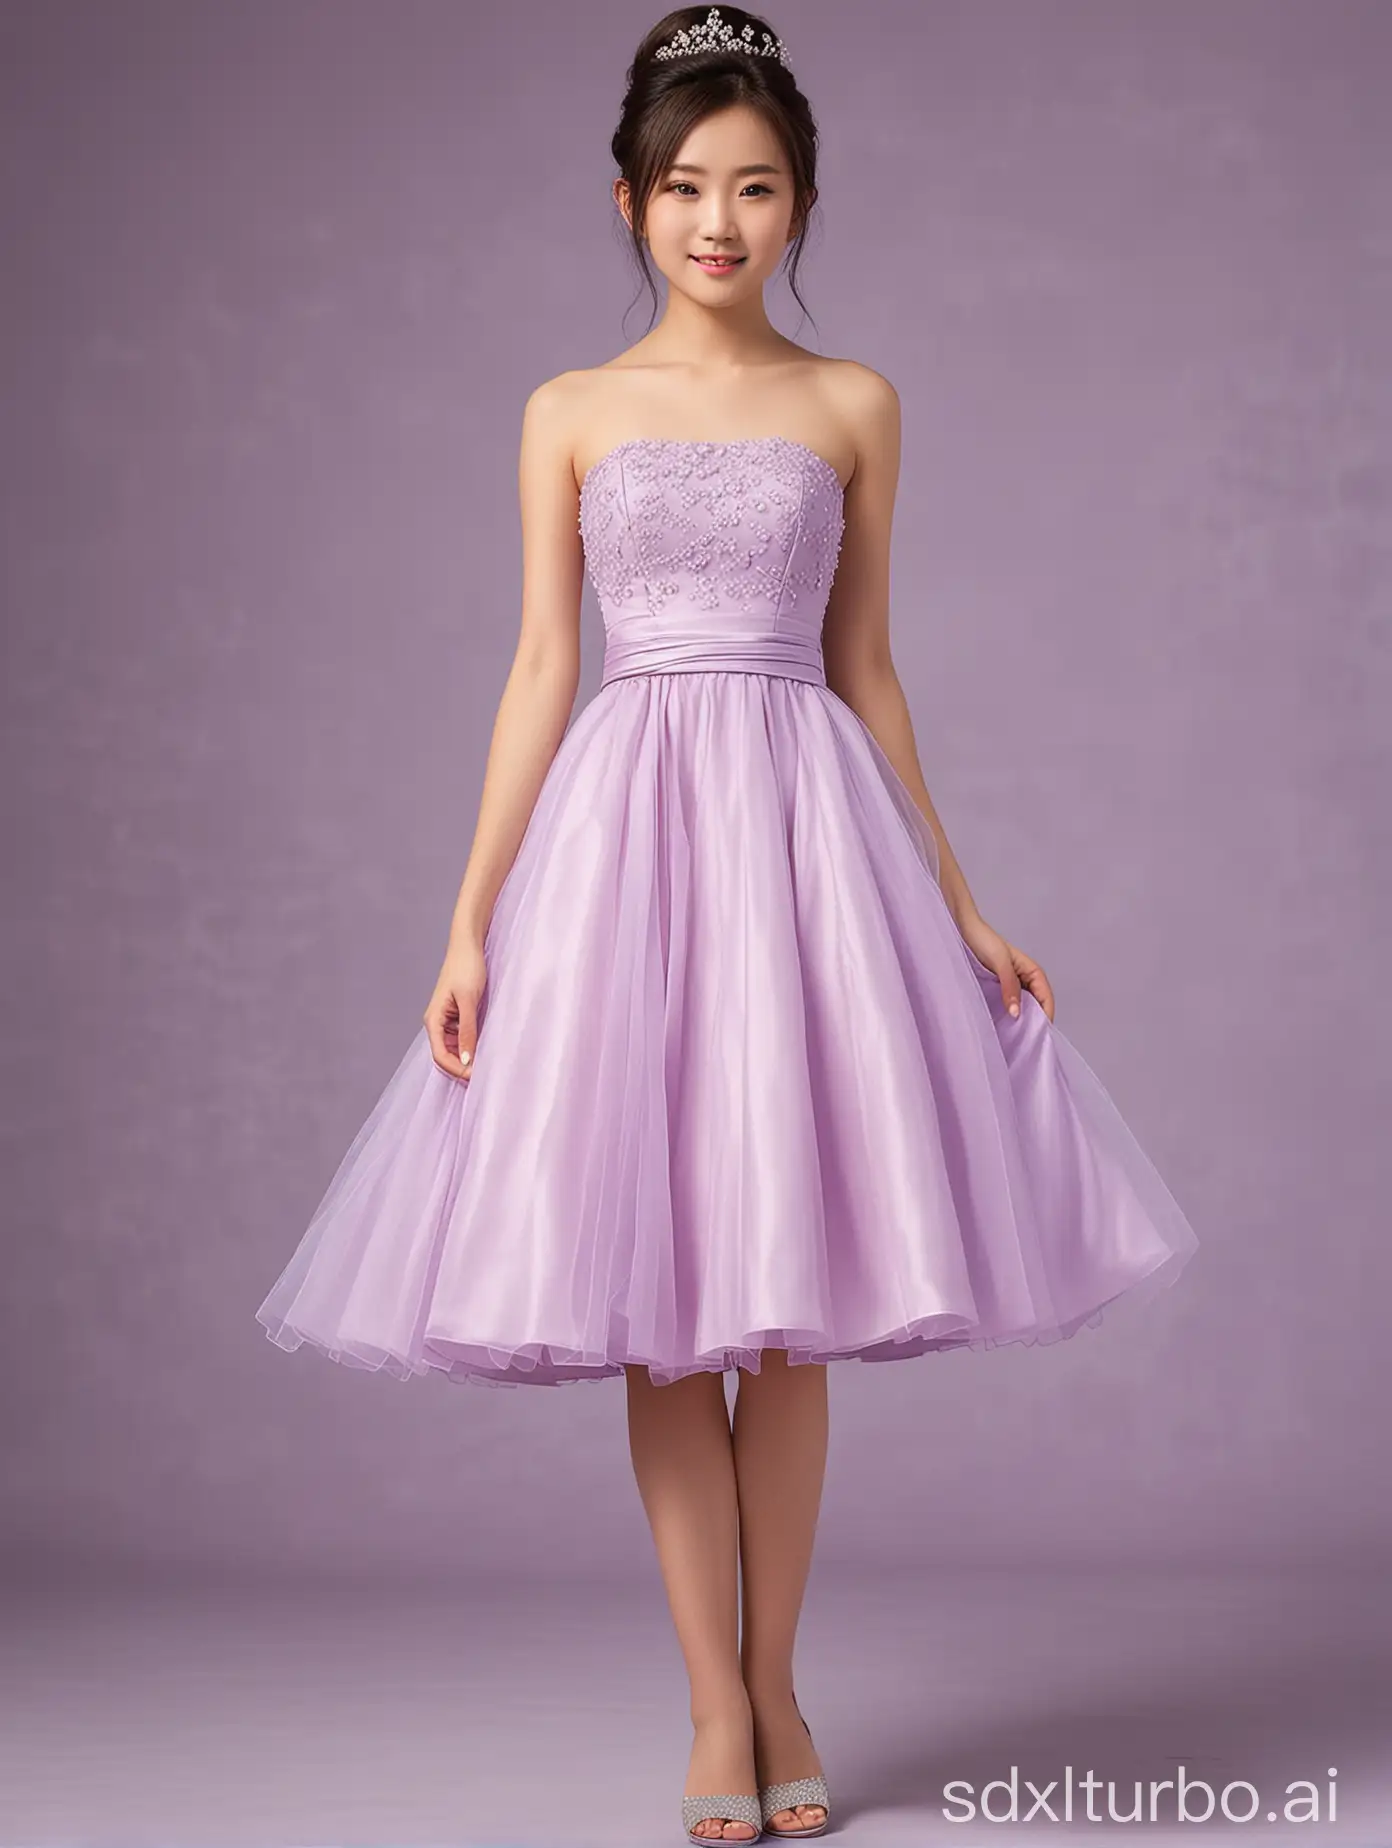 Japanese-12YearOld-Girl-in-Elegant-Light-Purple-Wedding-Dress